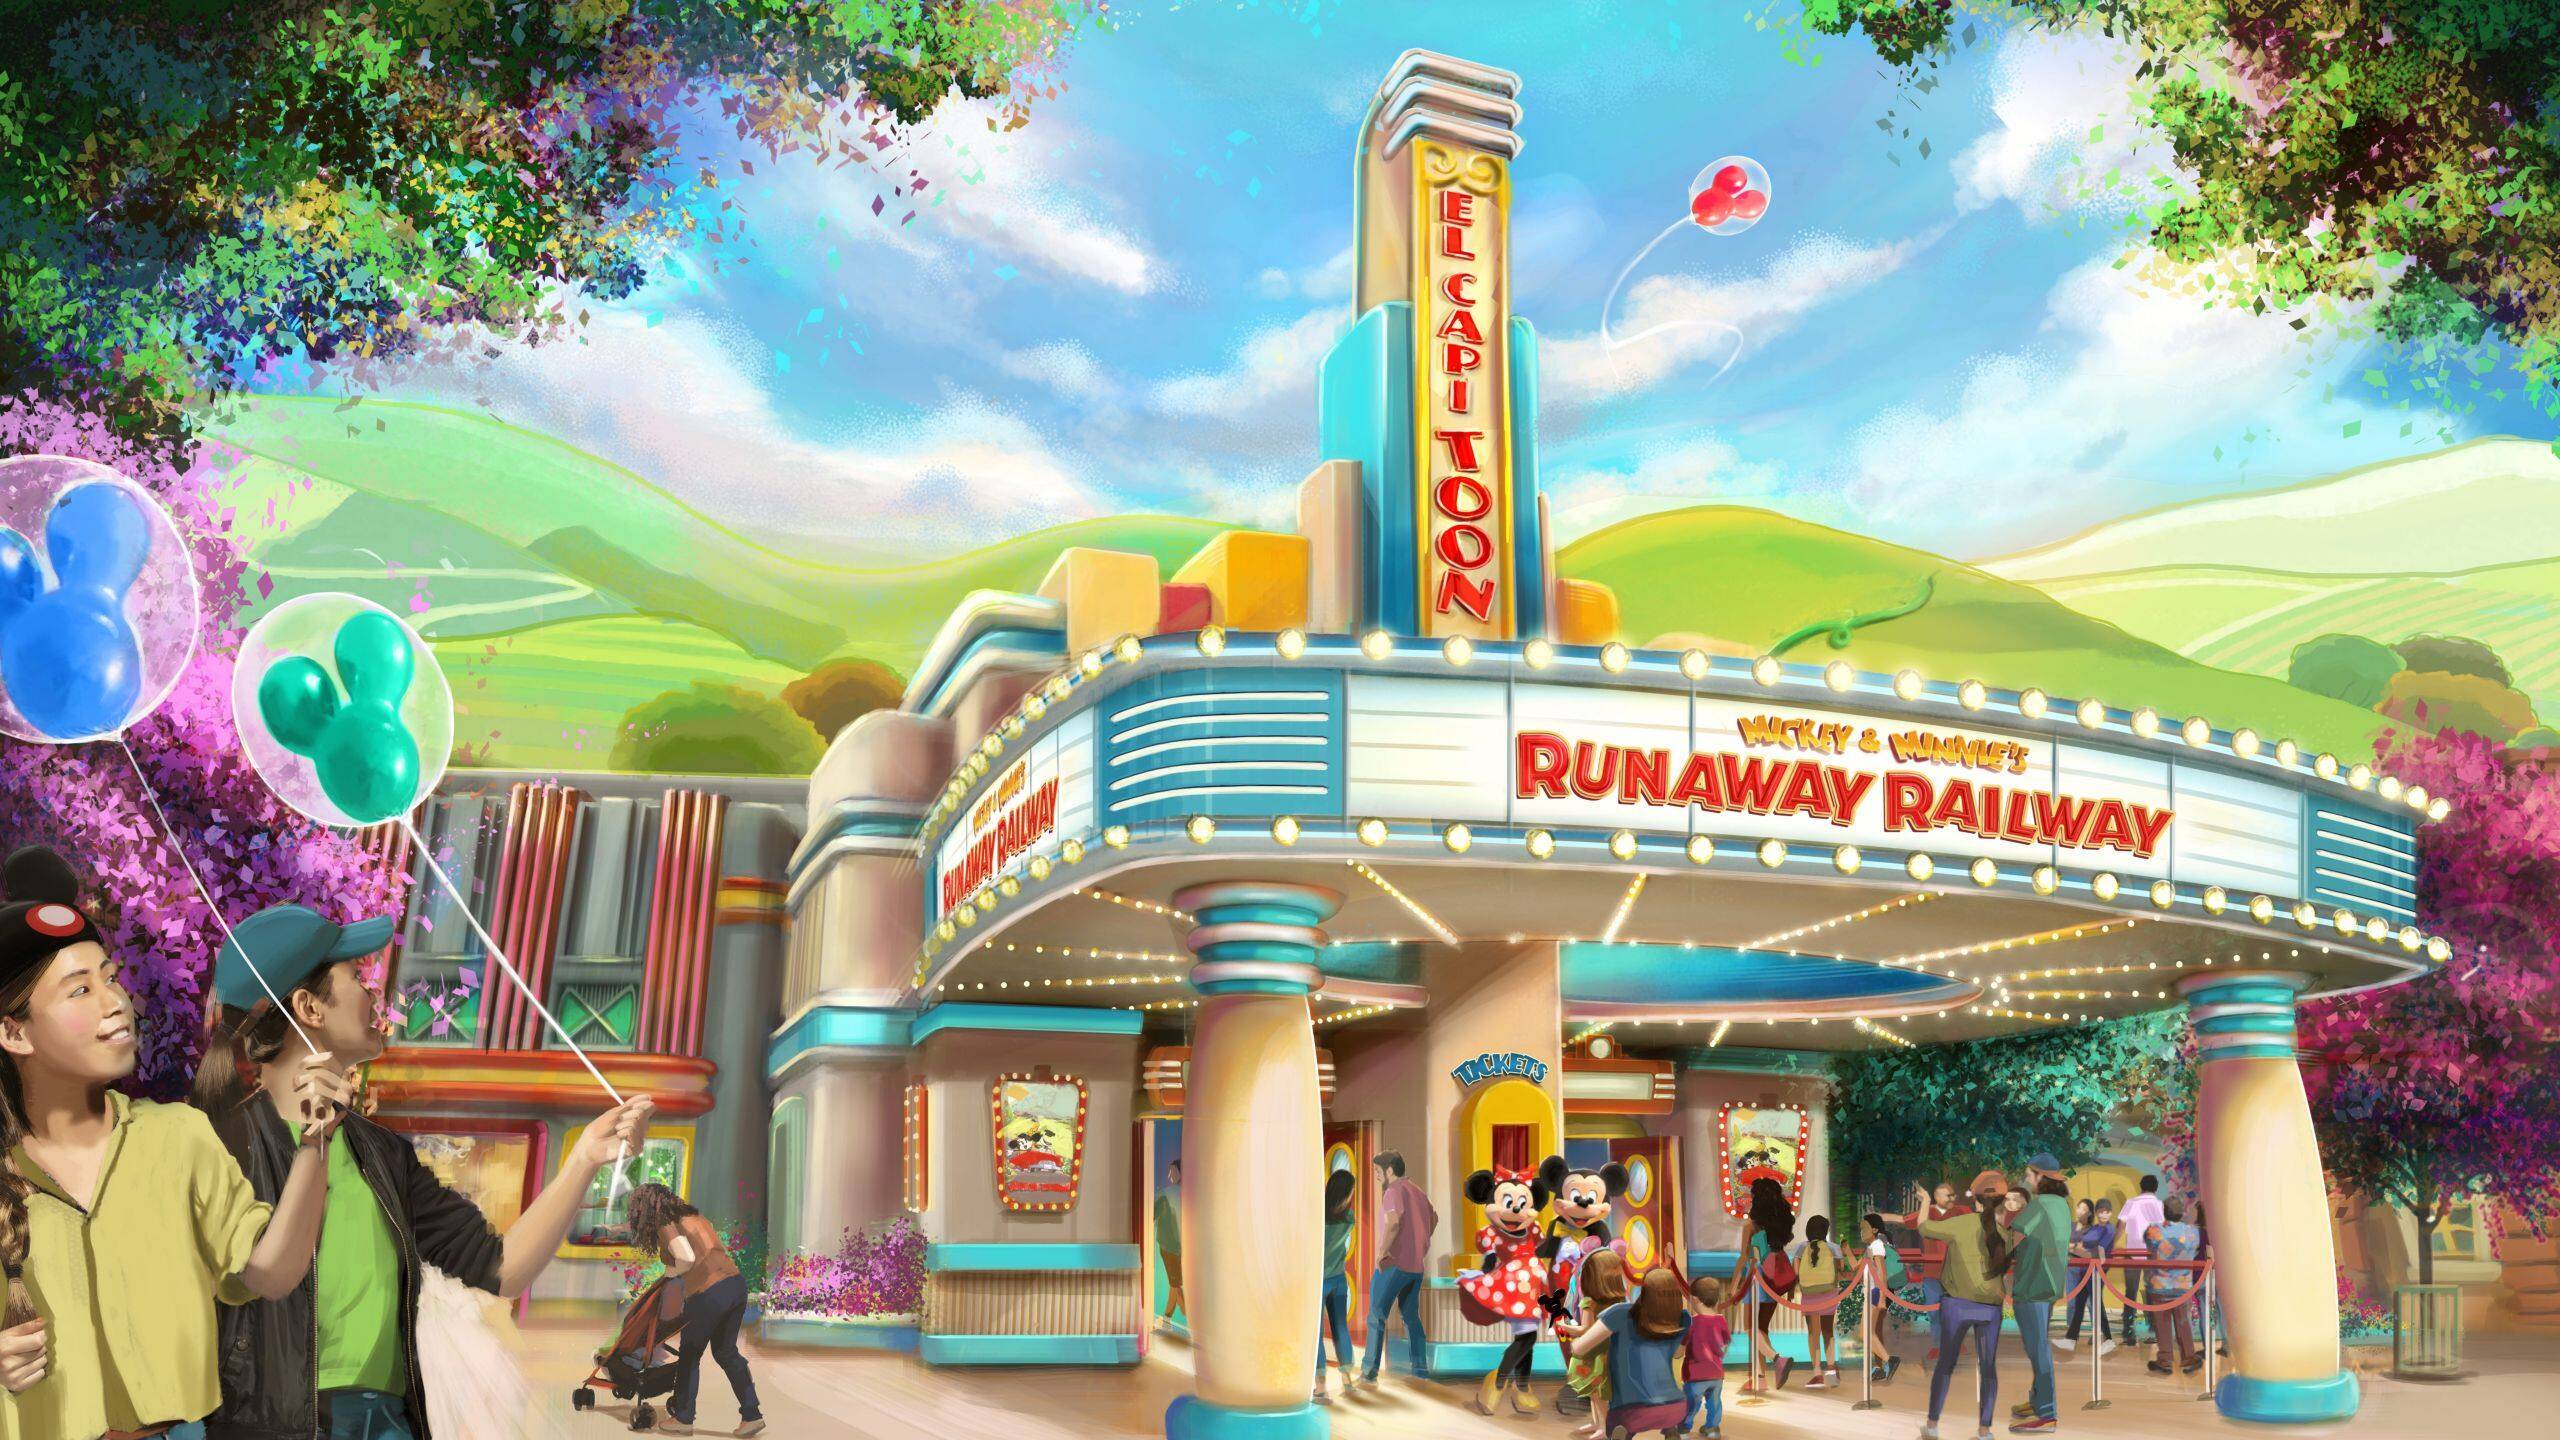 Mickey and Minnie’s Runaway Railway at Disneyland will use Virtual Queue and Lightning Lane